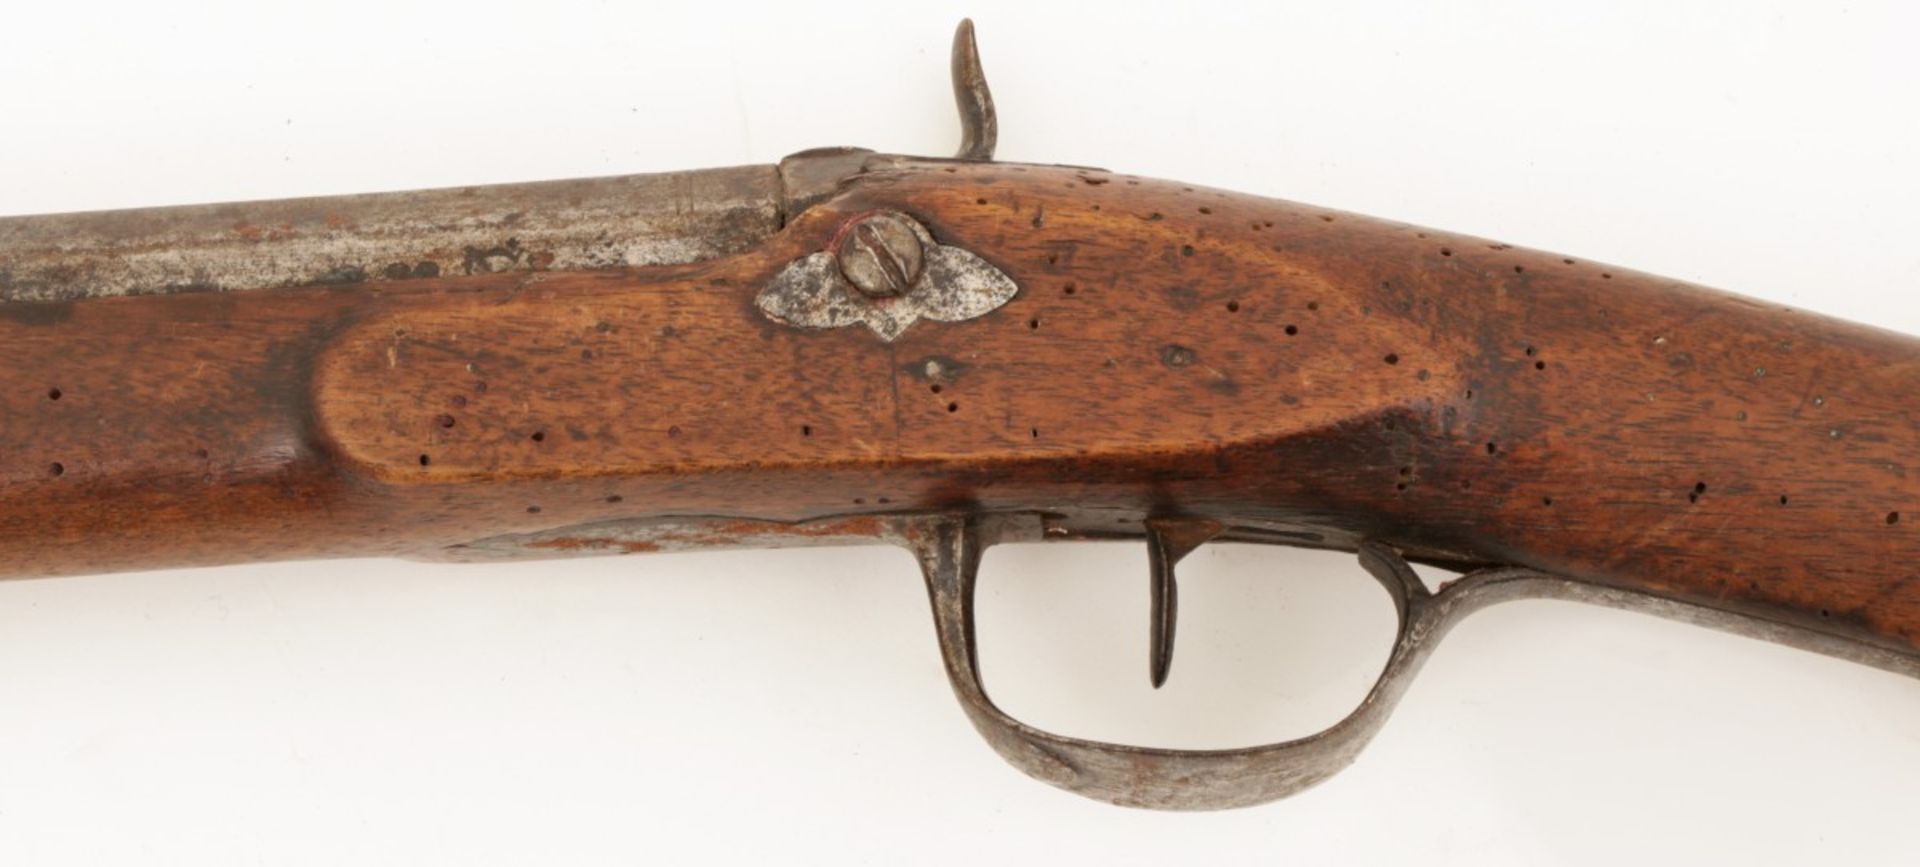 A sapper gun or percussion rifle, late 19th century. - Image 2 of 2